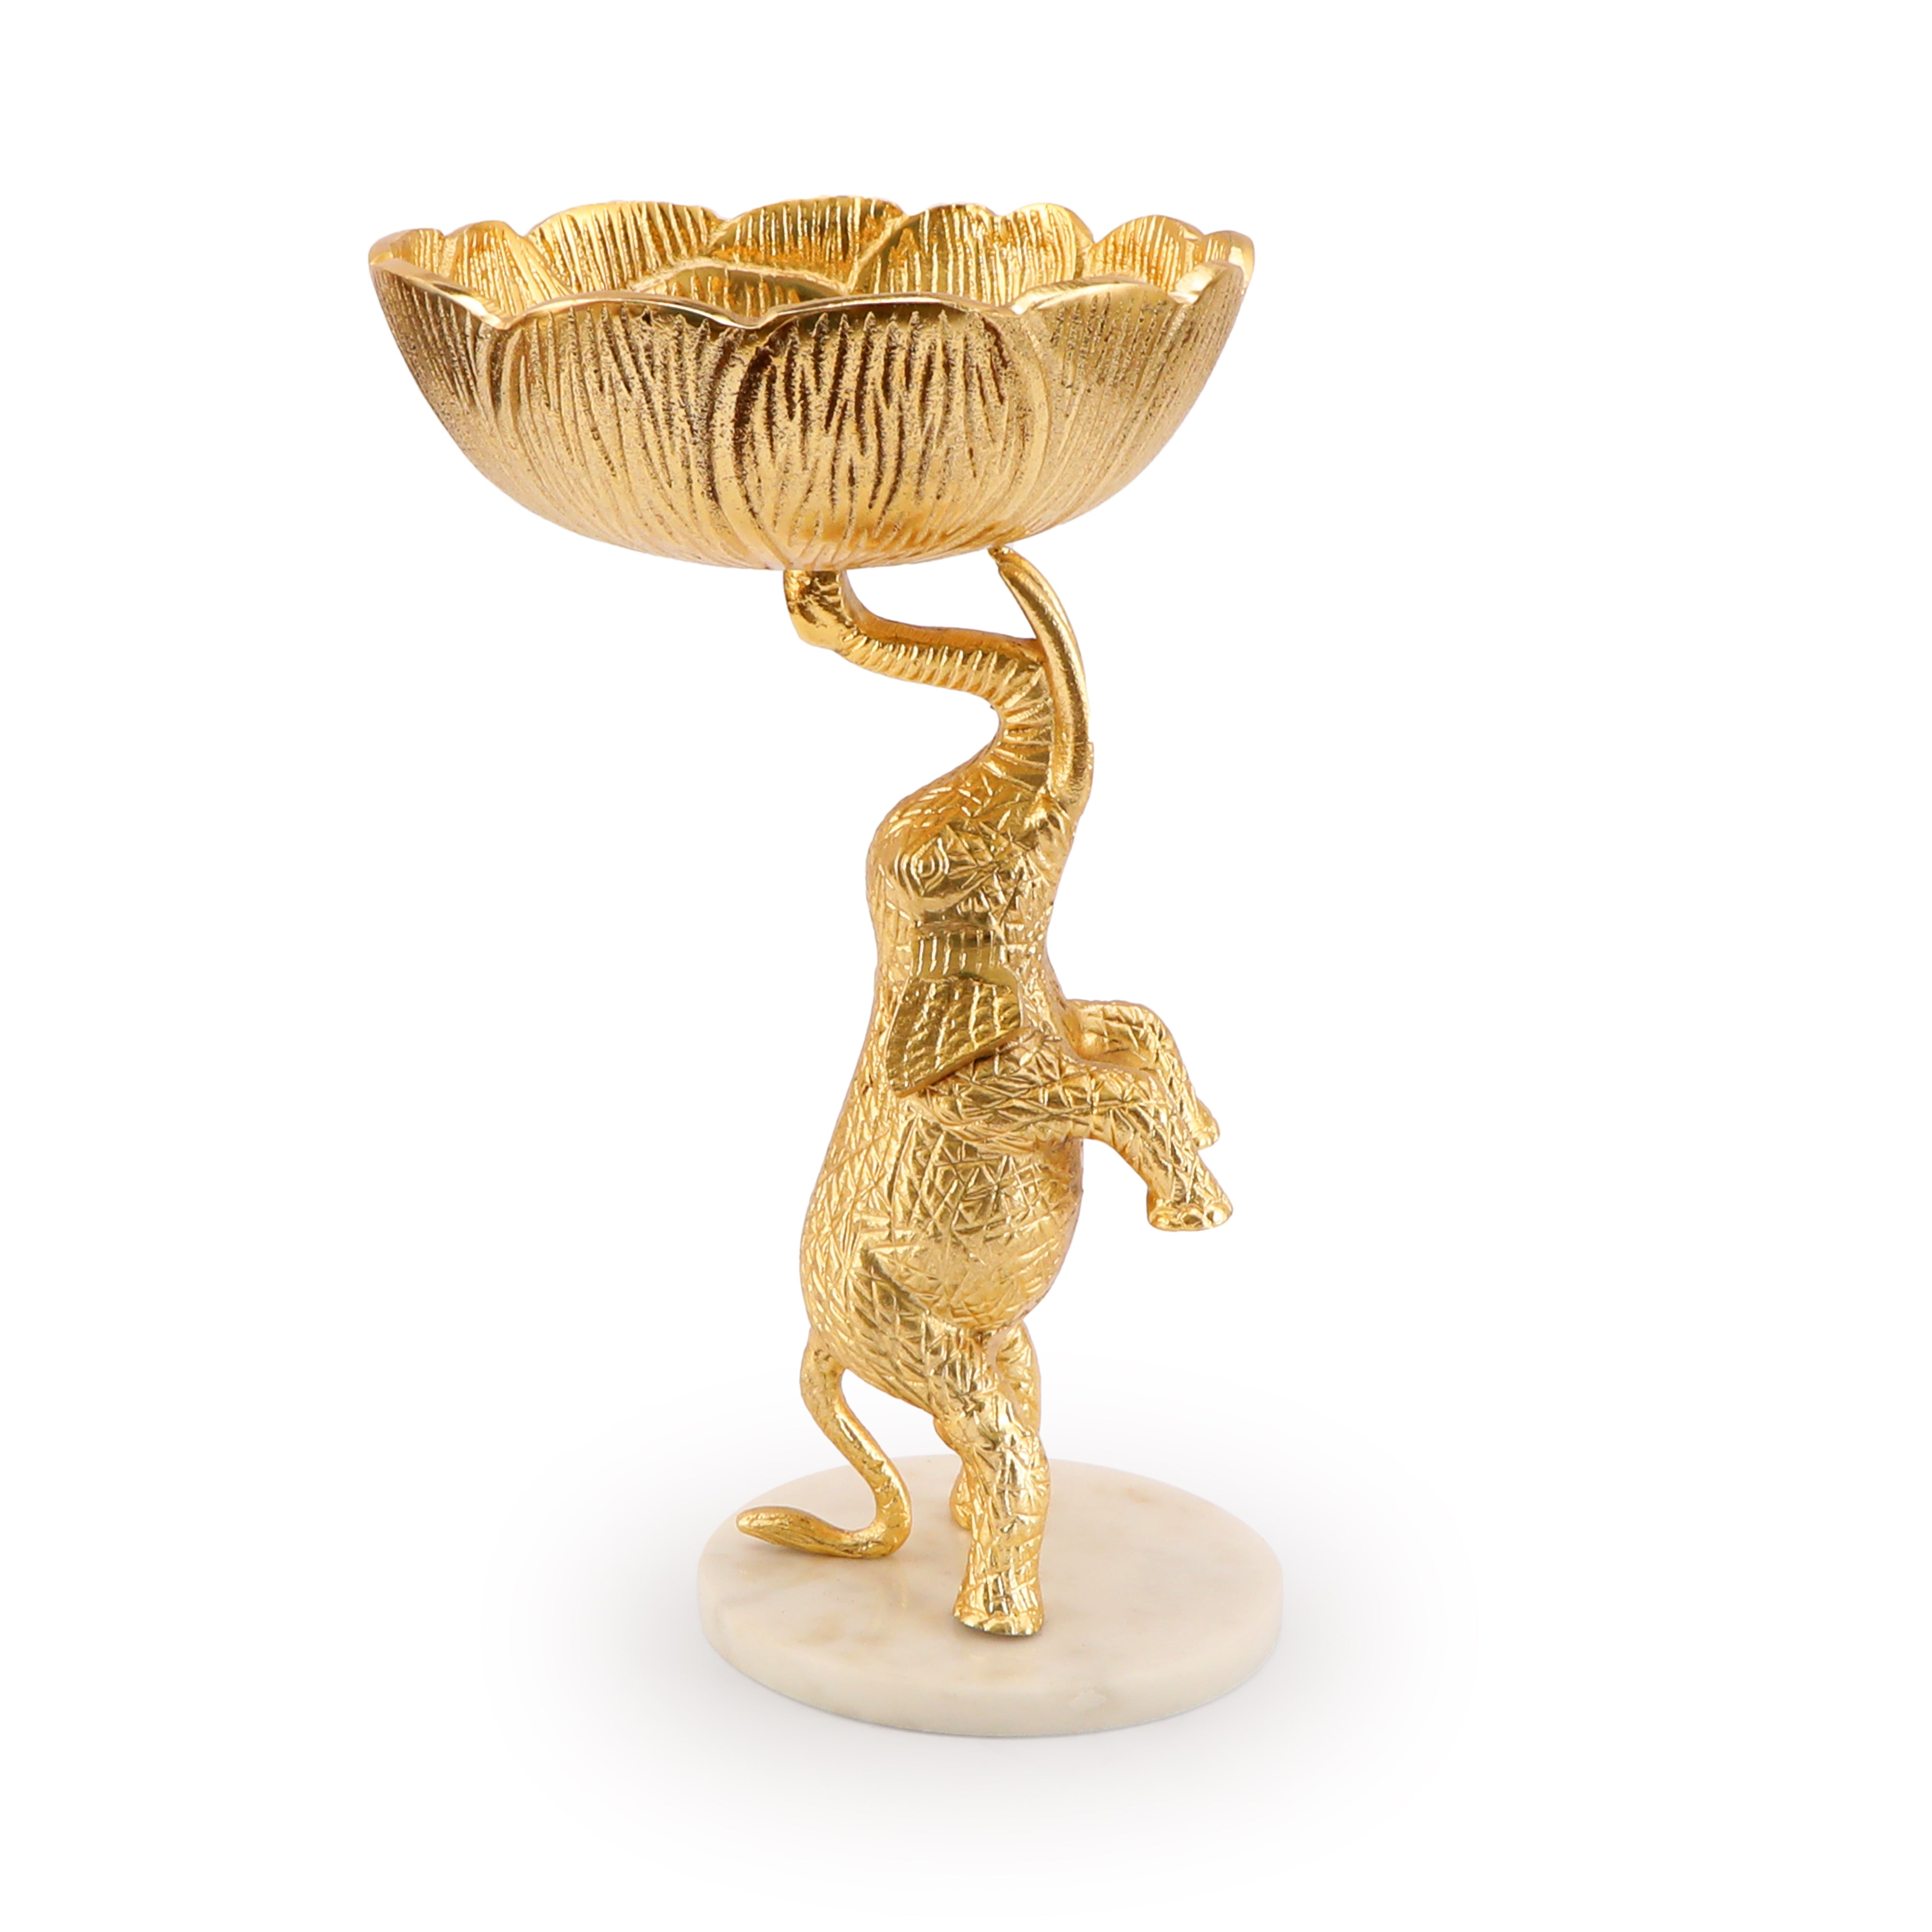 Diwali Hamper - Gold Plated Elephant Decorative Bowl